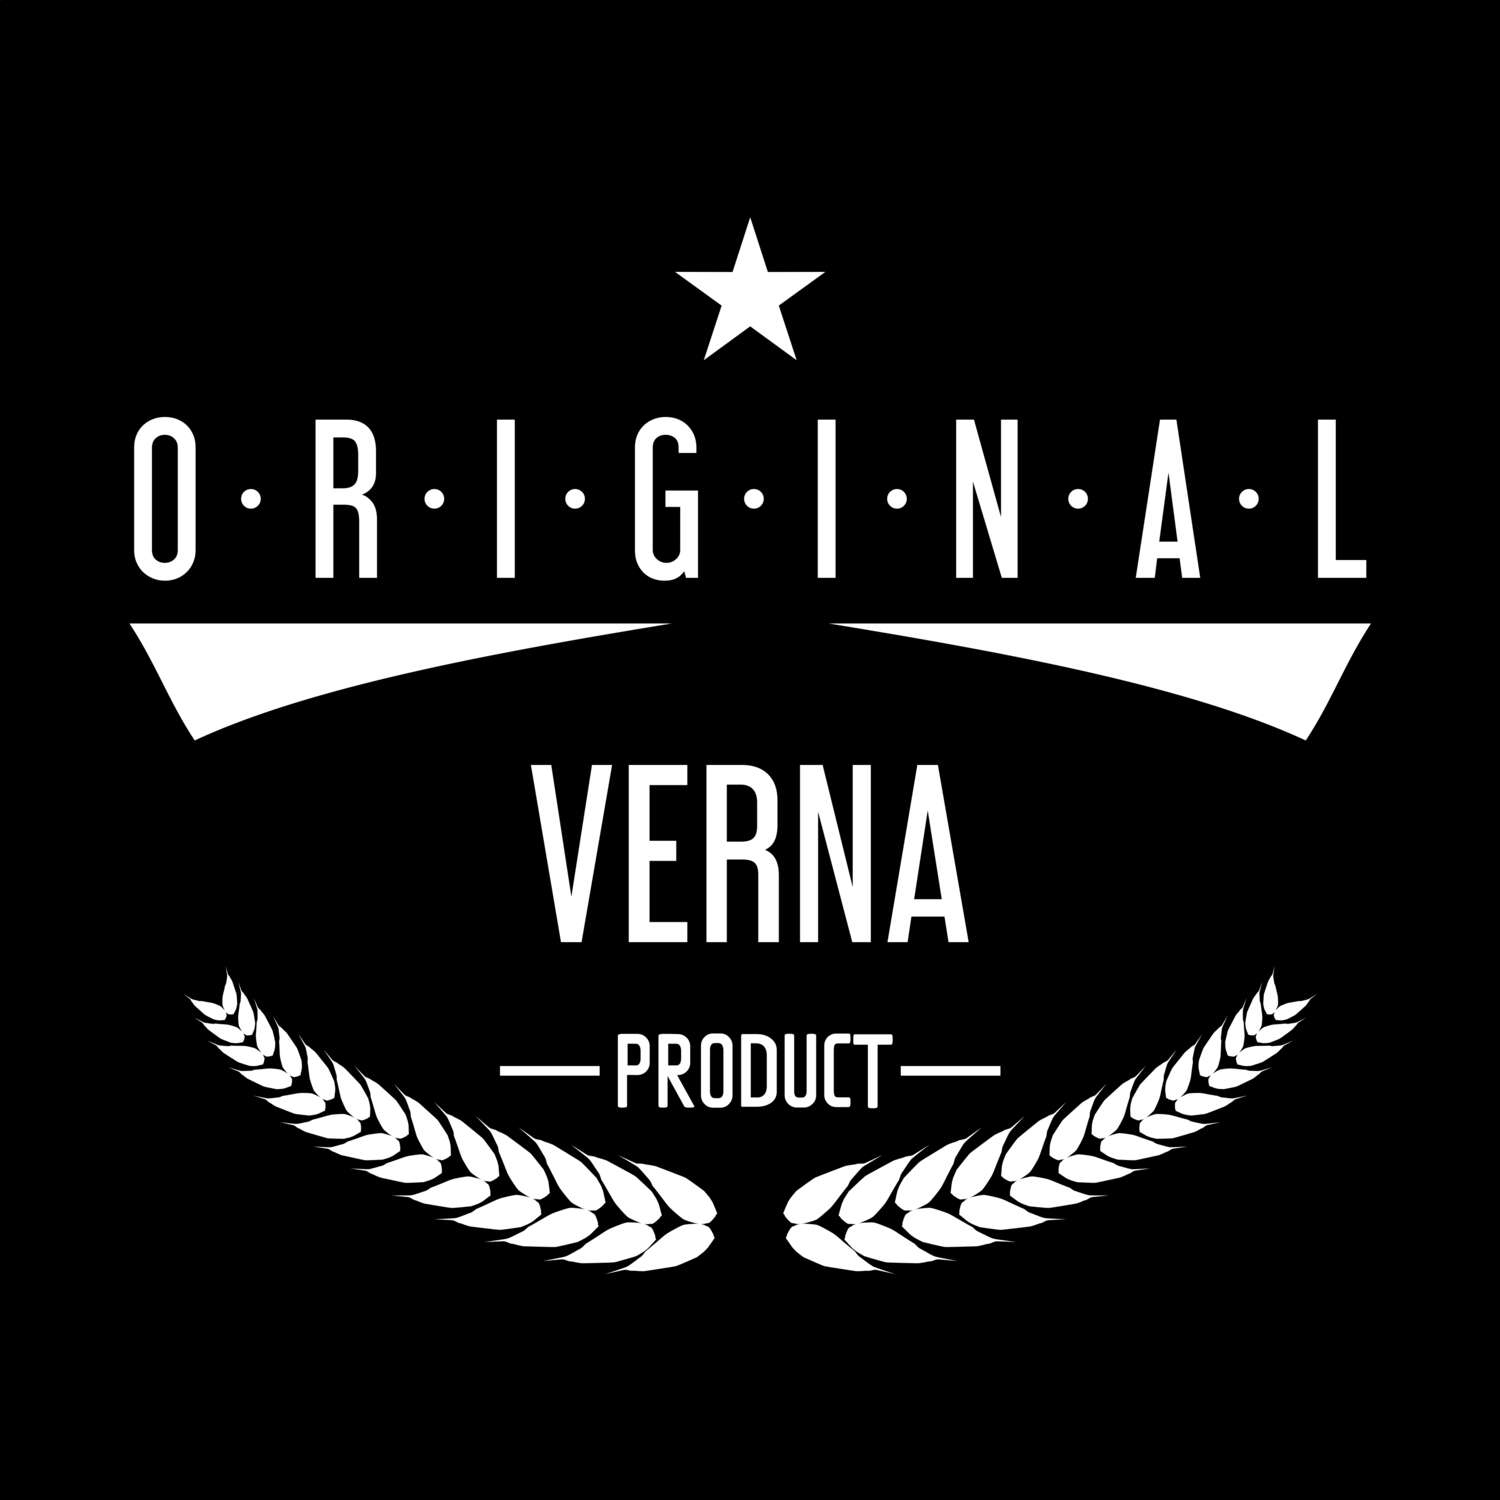 Verna T-Shirt »Original Product«